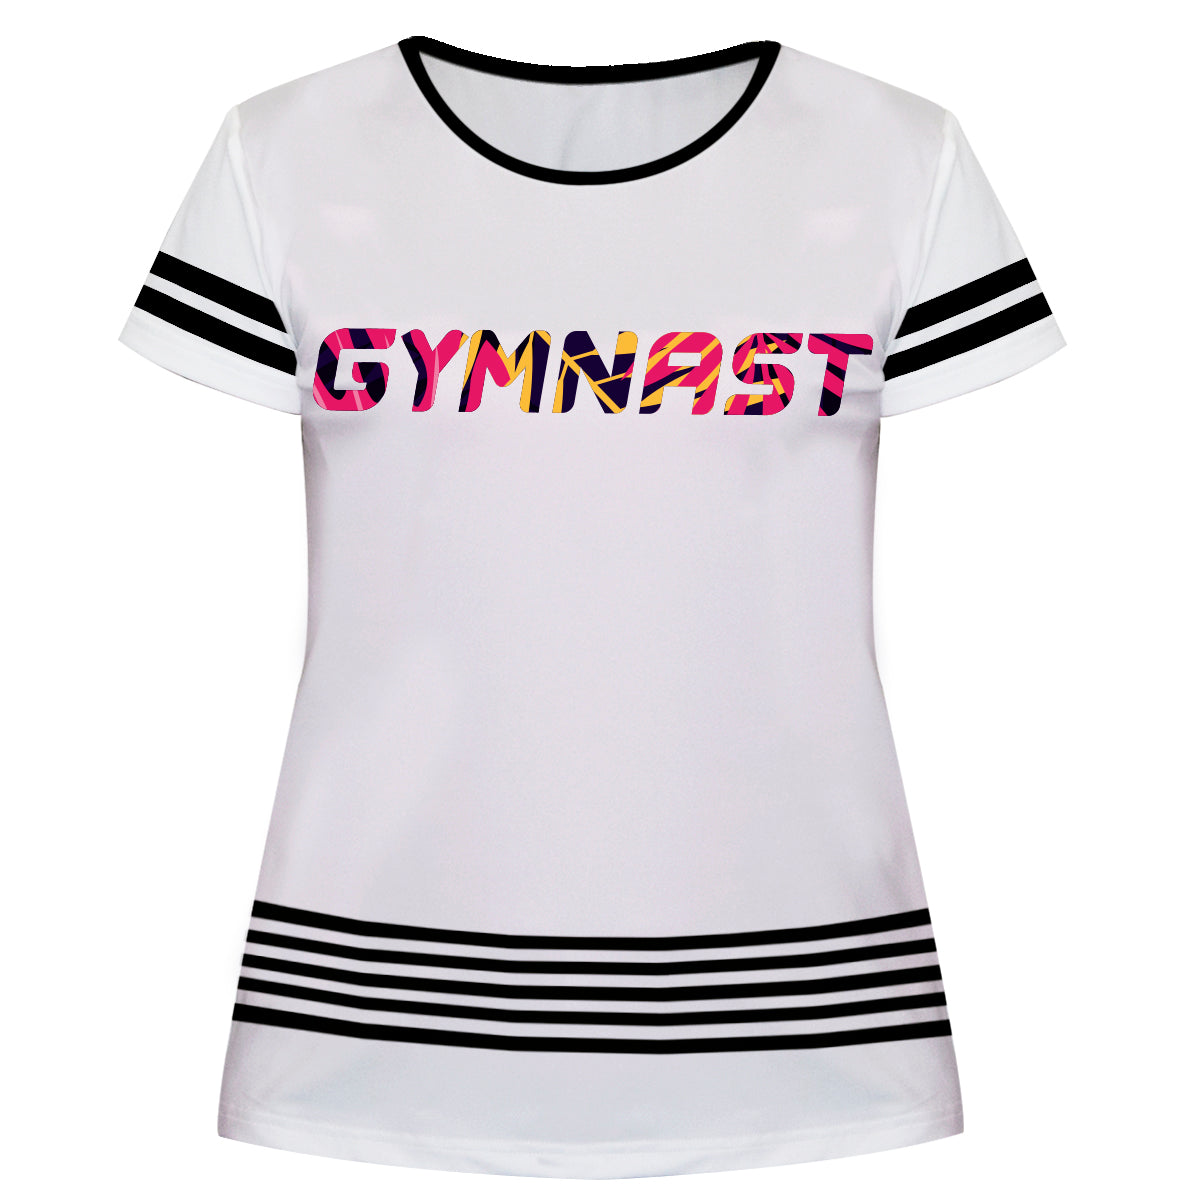 Gymnast Stripe White Black Short Sleeve Girls Tee Shirt - Wimziy&Co.